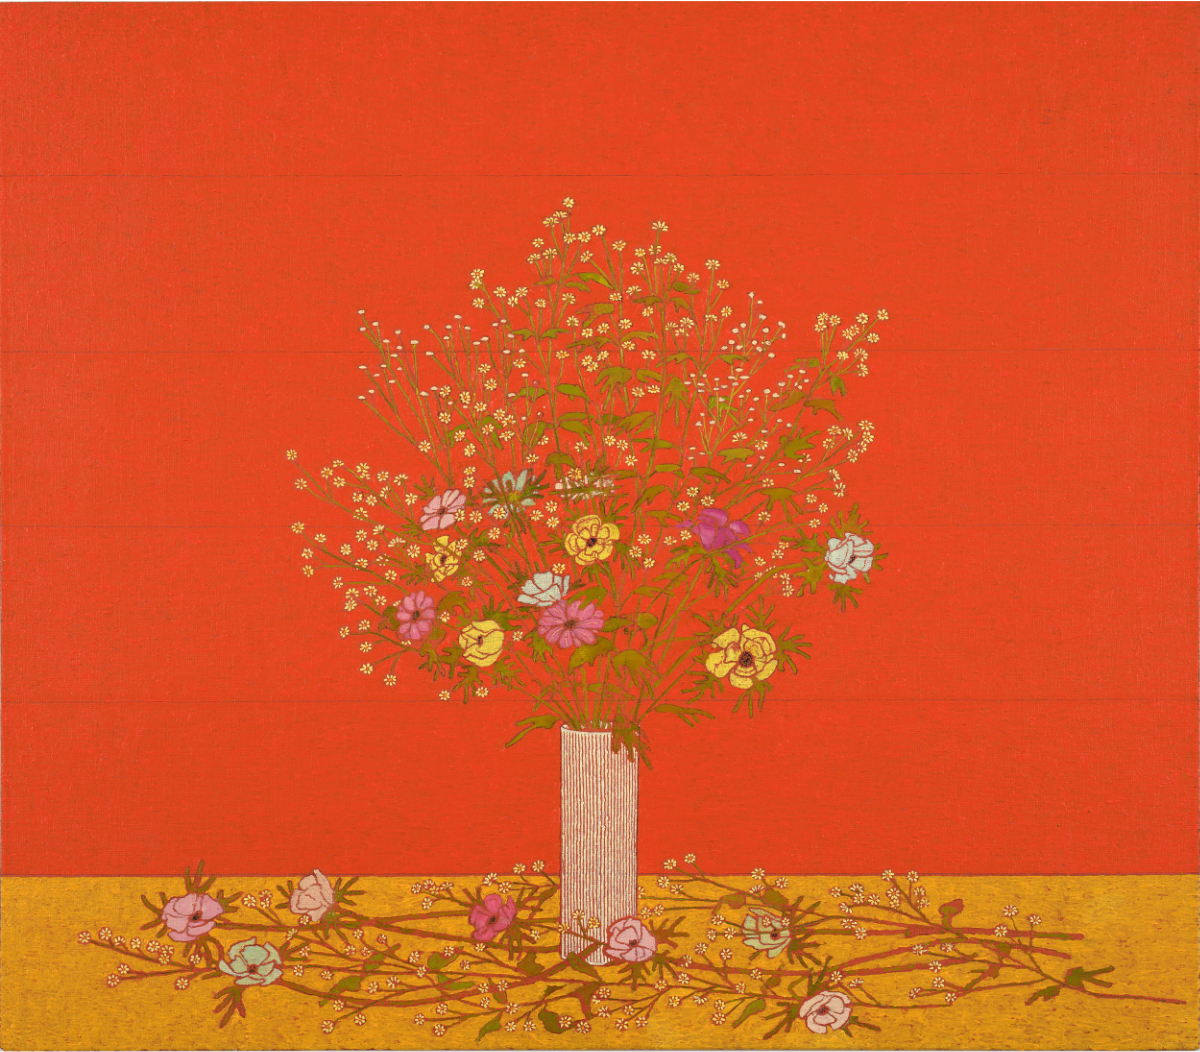 Berlin Flowers (Rika's Vase), 70 x 80 cm, Oil on Linen, 2020, Stephen Chambers Studio